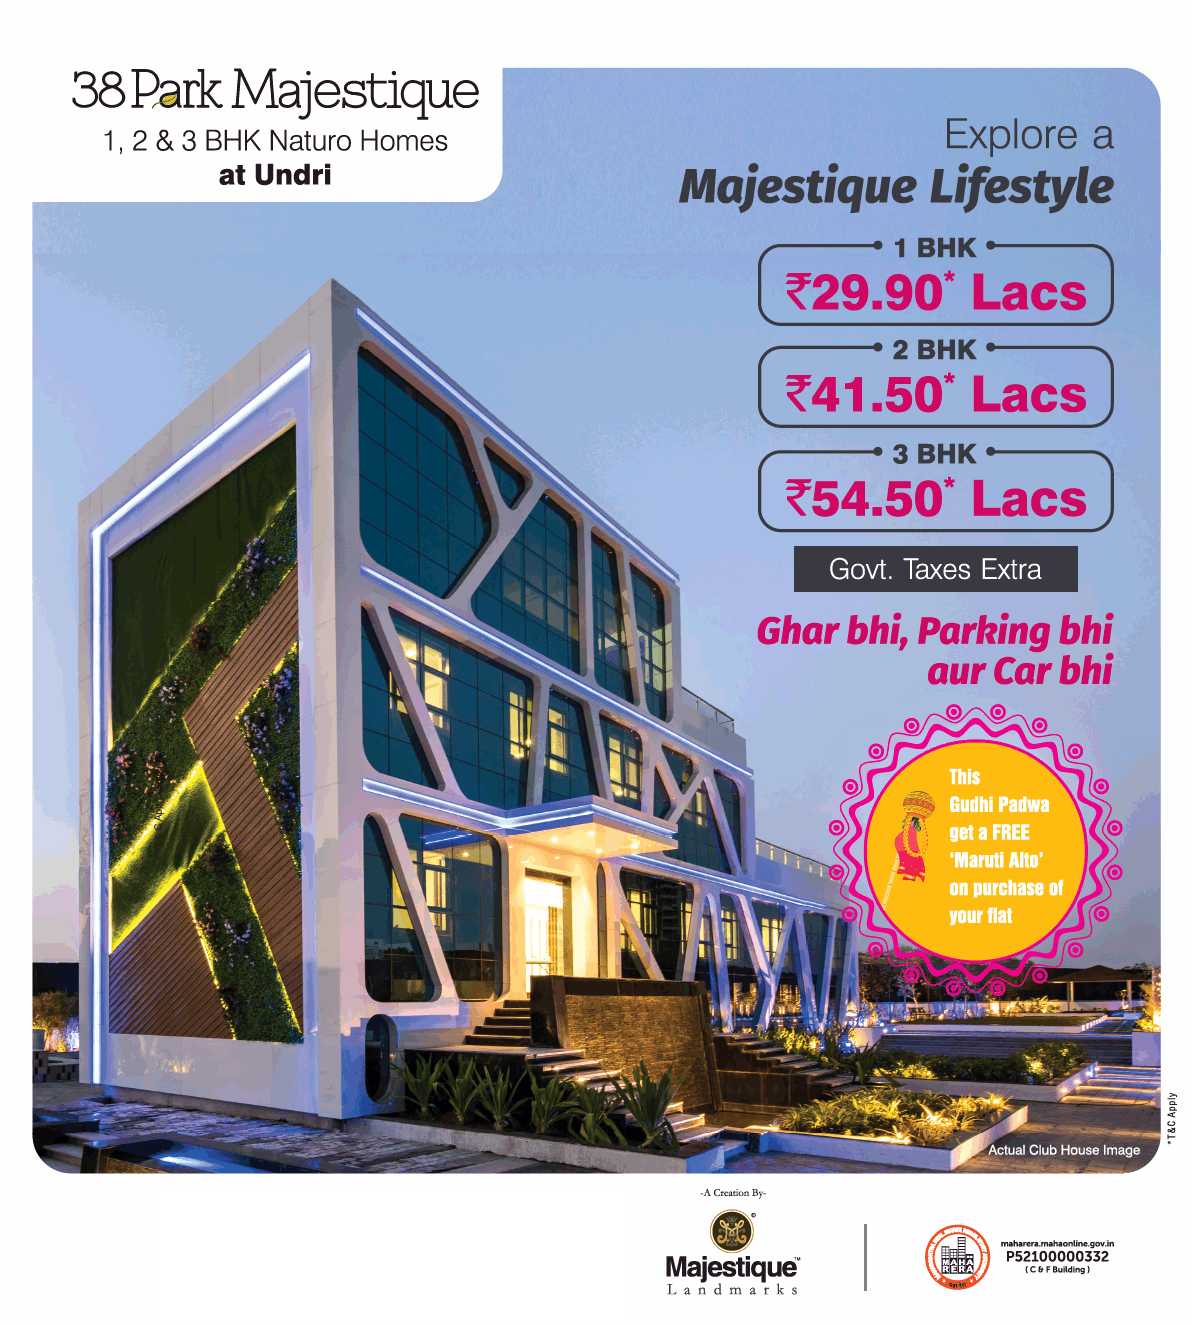 Explore a majestique lifestyle by residing at 38 Park Majestique in Pune